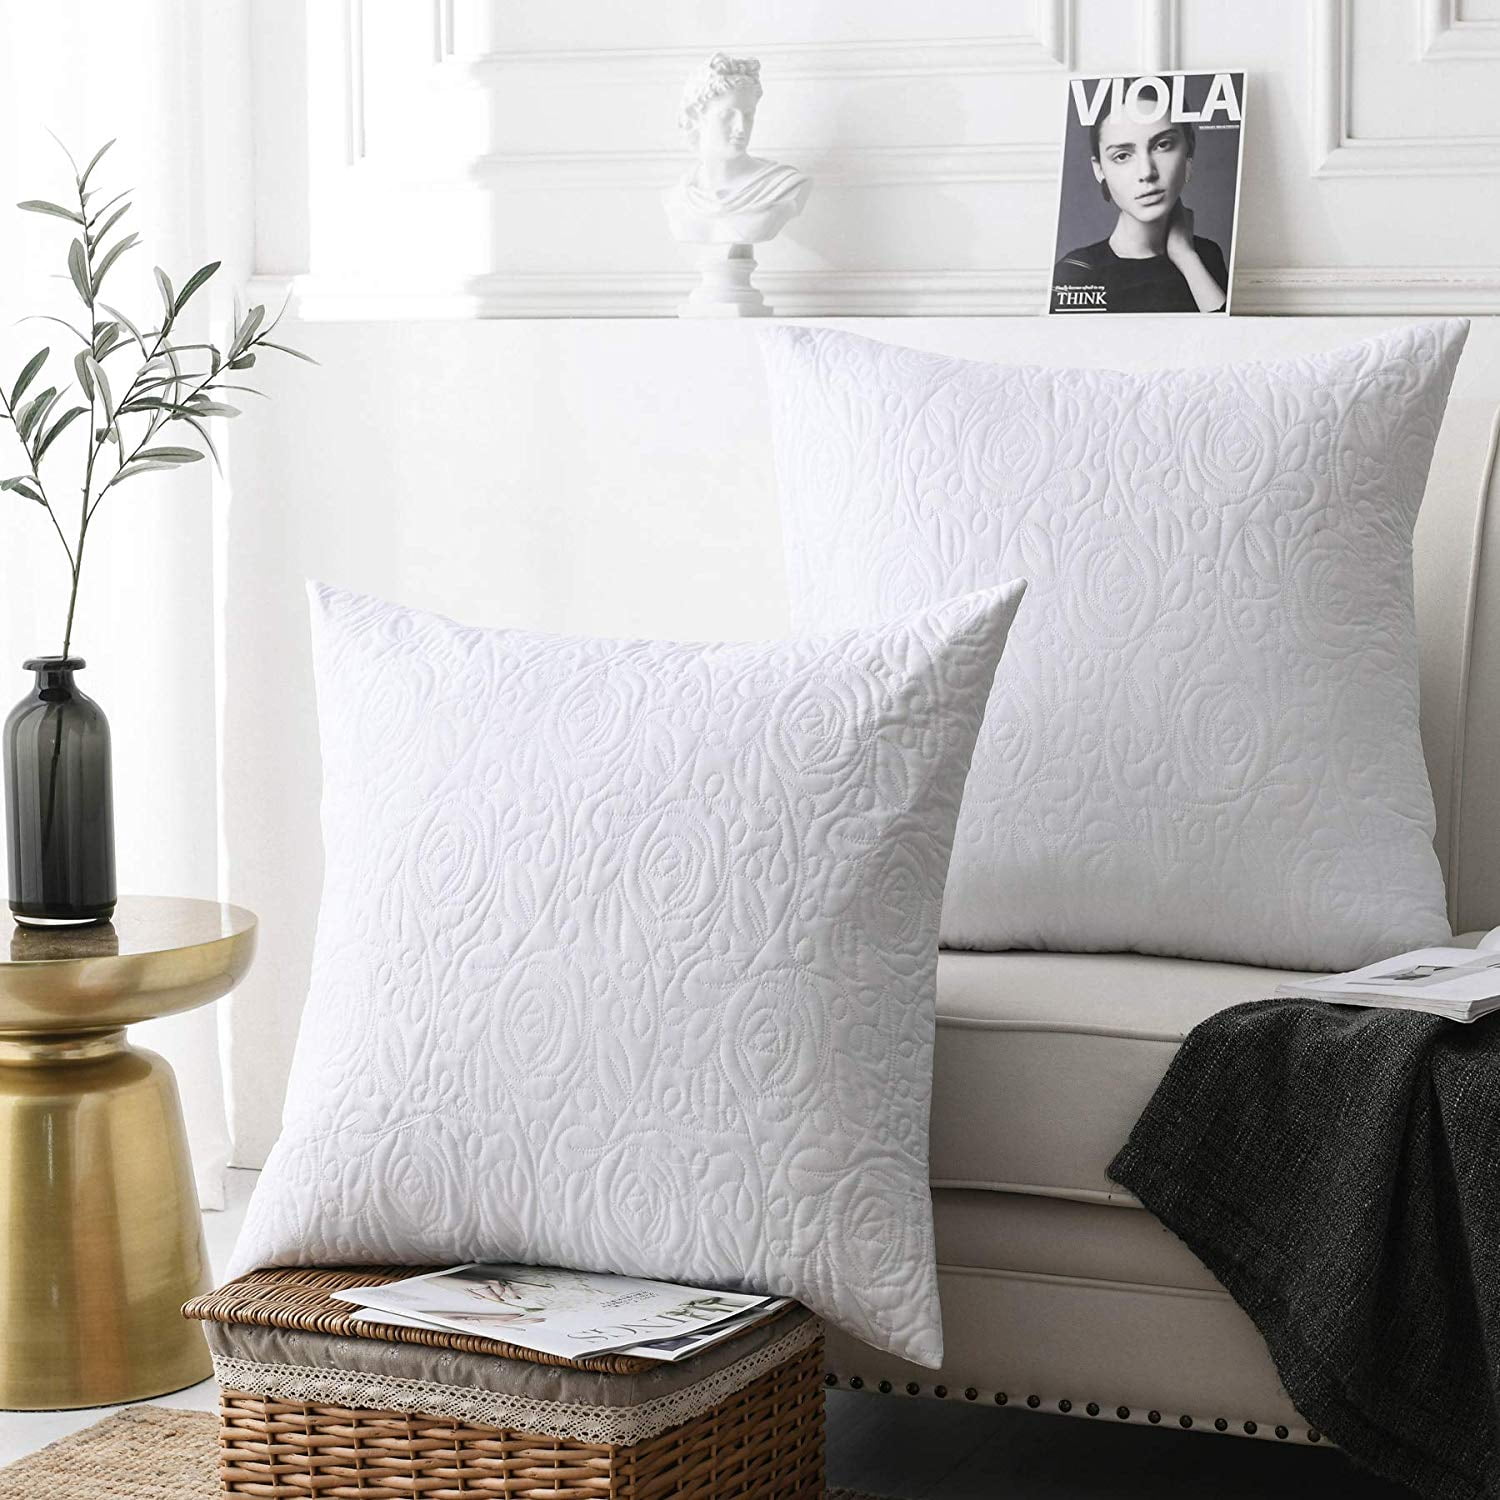 Brushed Microfiber Euro Sham Pillow Covers Super Soft and Cozy White European Pillow Shams Bedsure Euro Pillow Sham Covers 26x26 Set of 2 